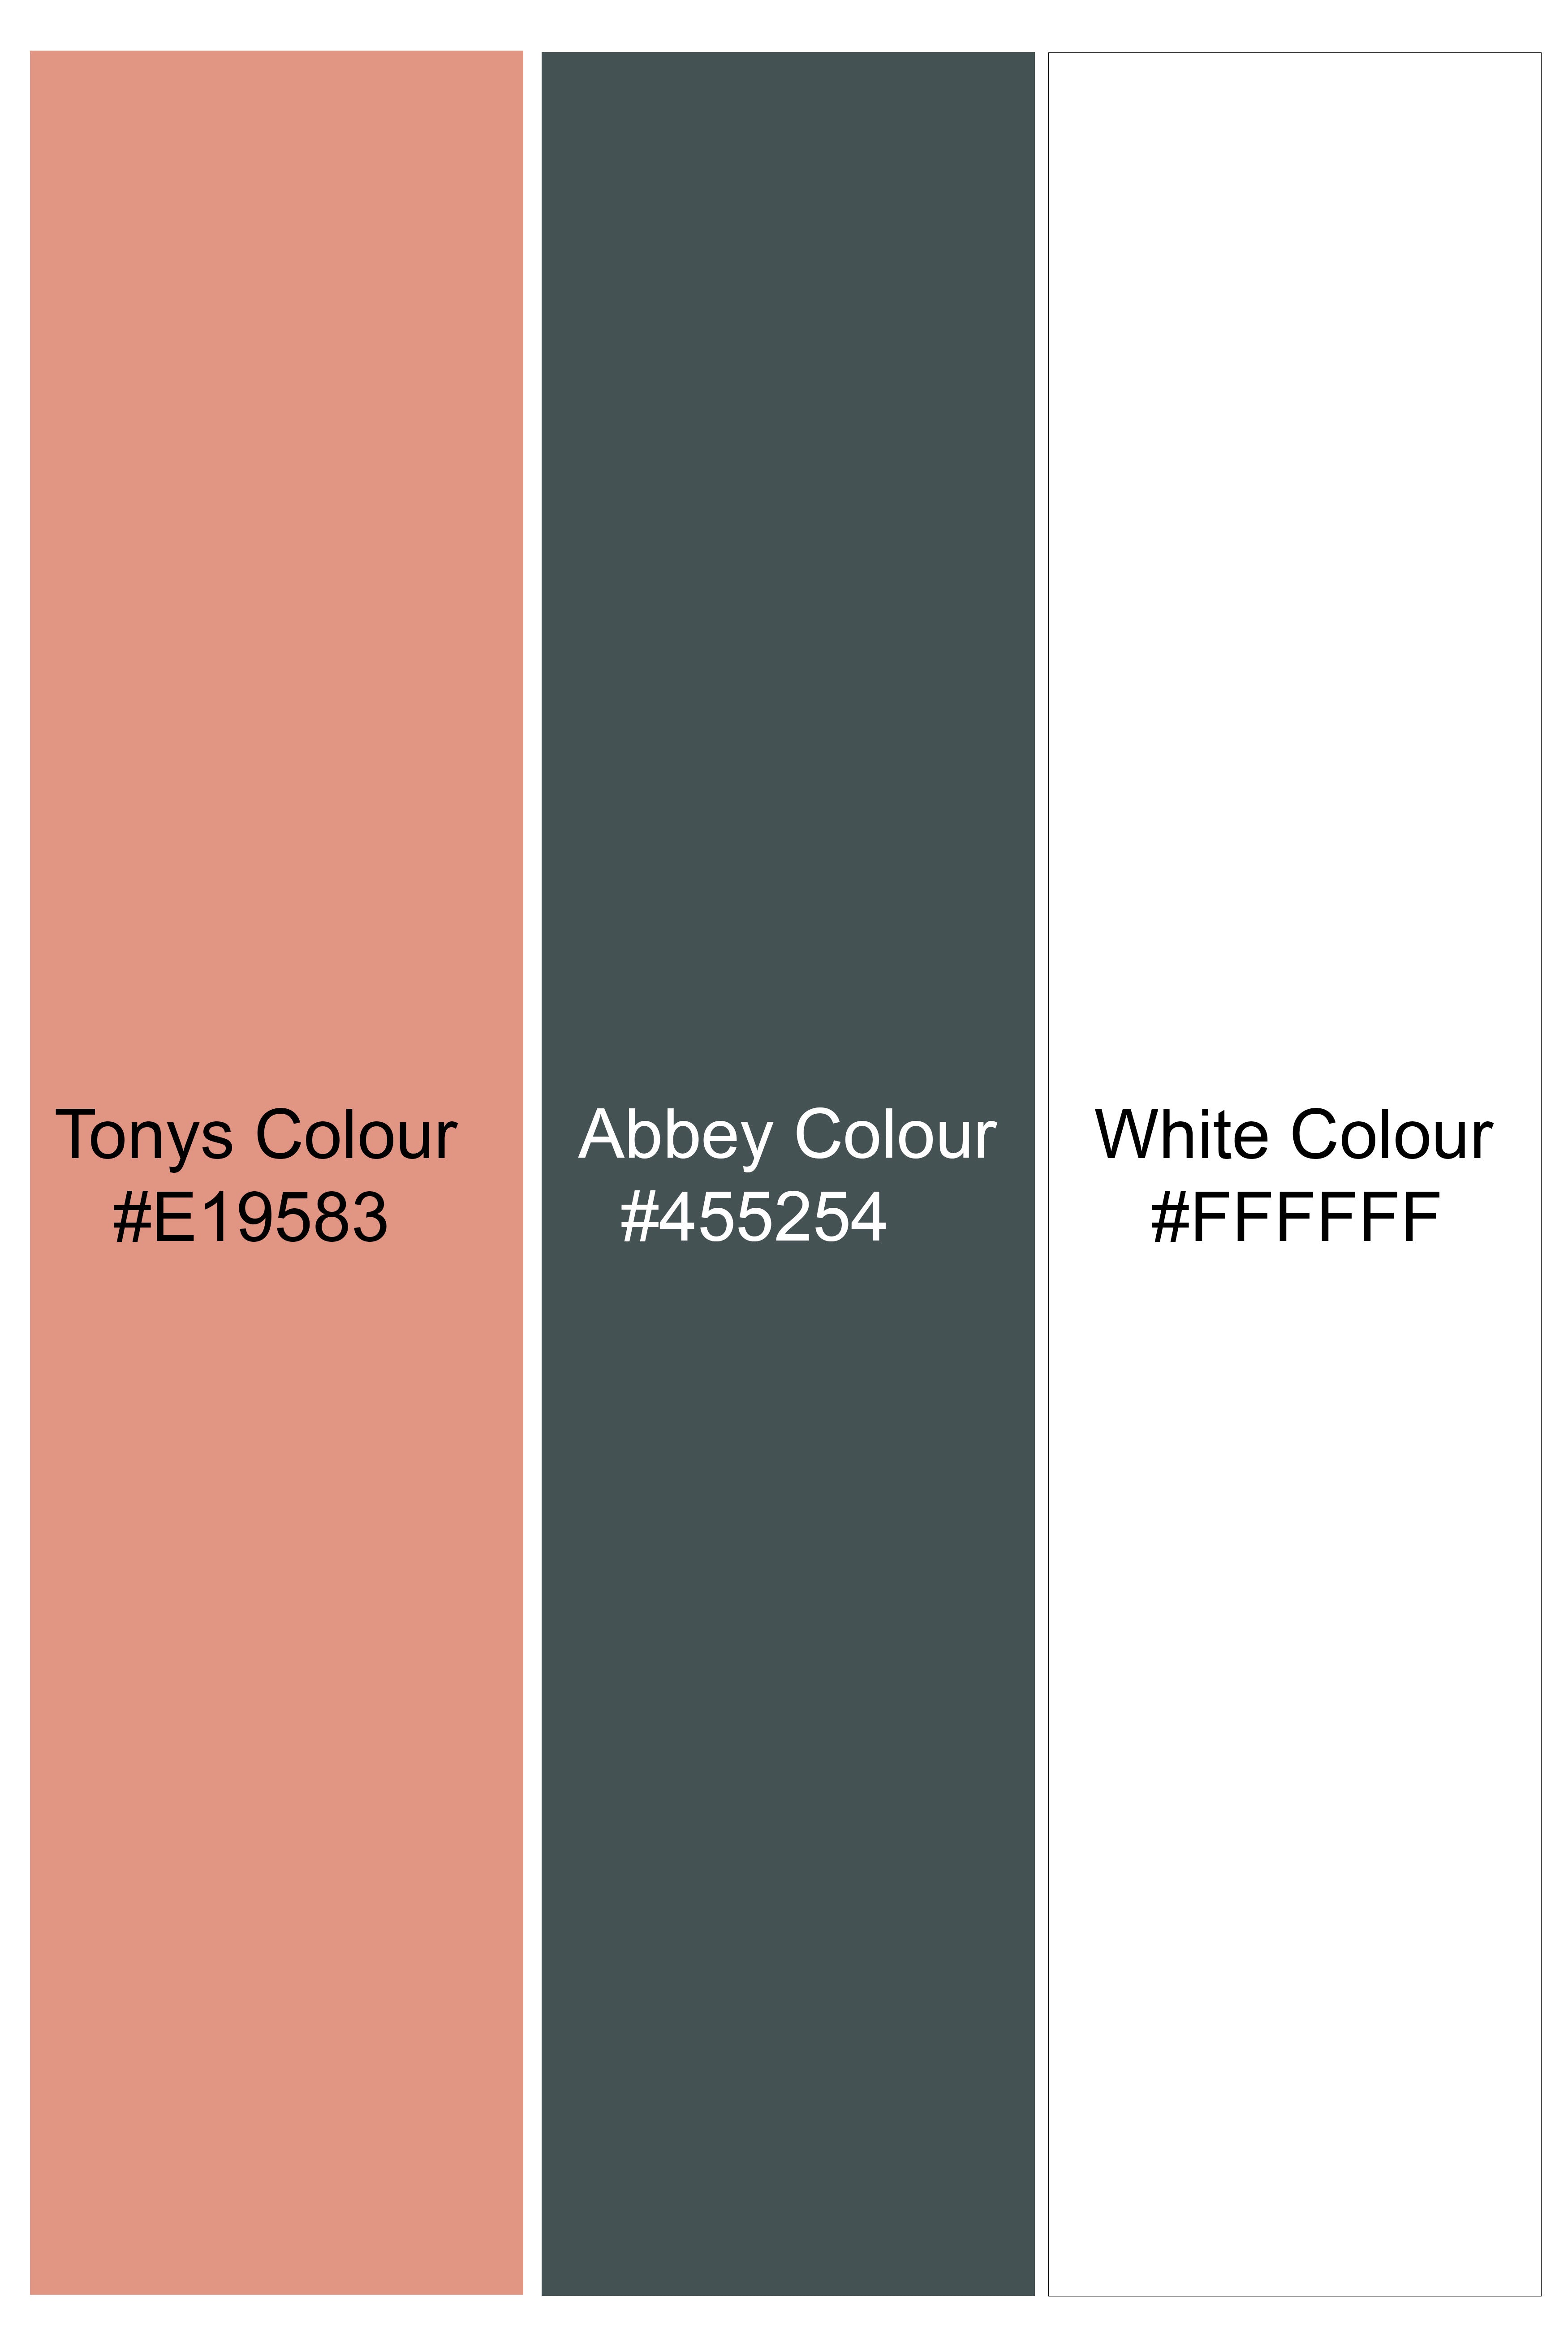 Tonys Peach and Abbey Gray Plaid Twill Premium Cotton Shorts SR383-28, SR383-30, SR383-32, SR383-34, SR383-36, SR383-38, SR383-40, SR383-42, SR383-44